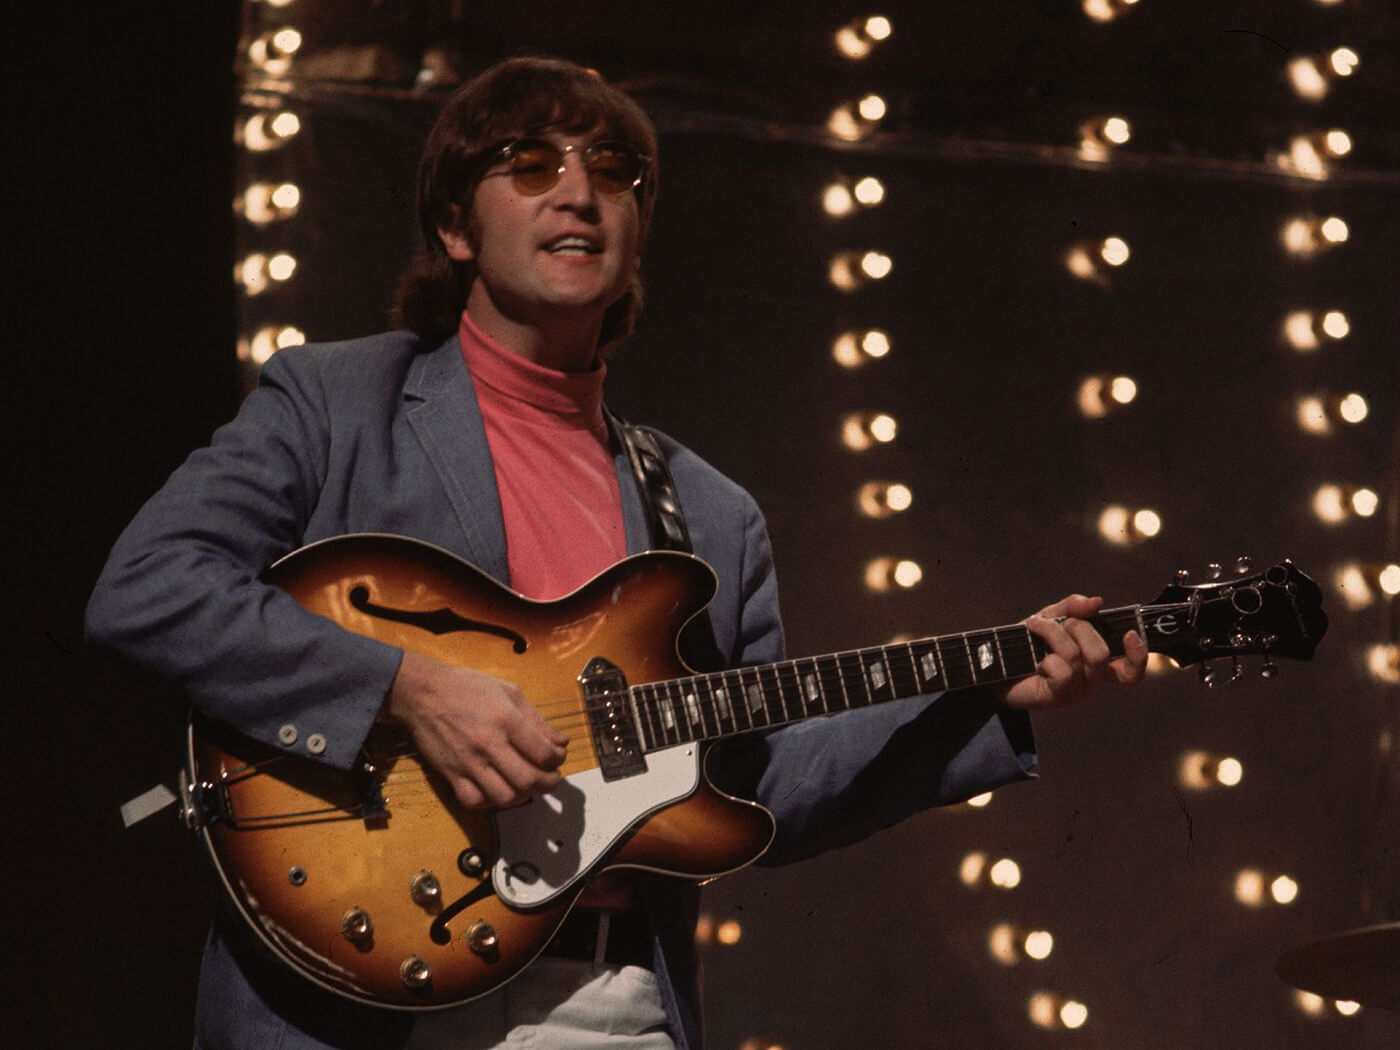 John Lennon of The Beatle